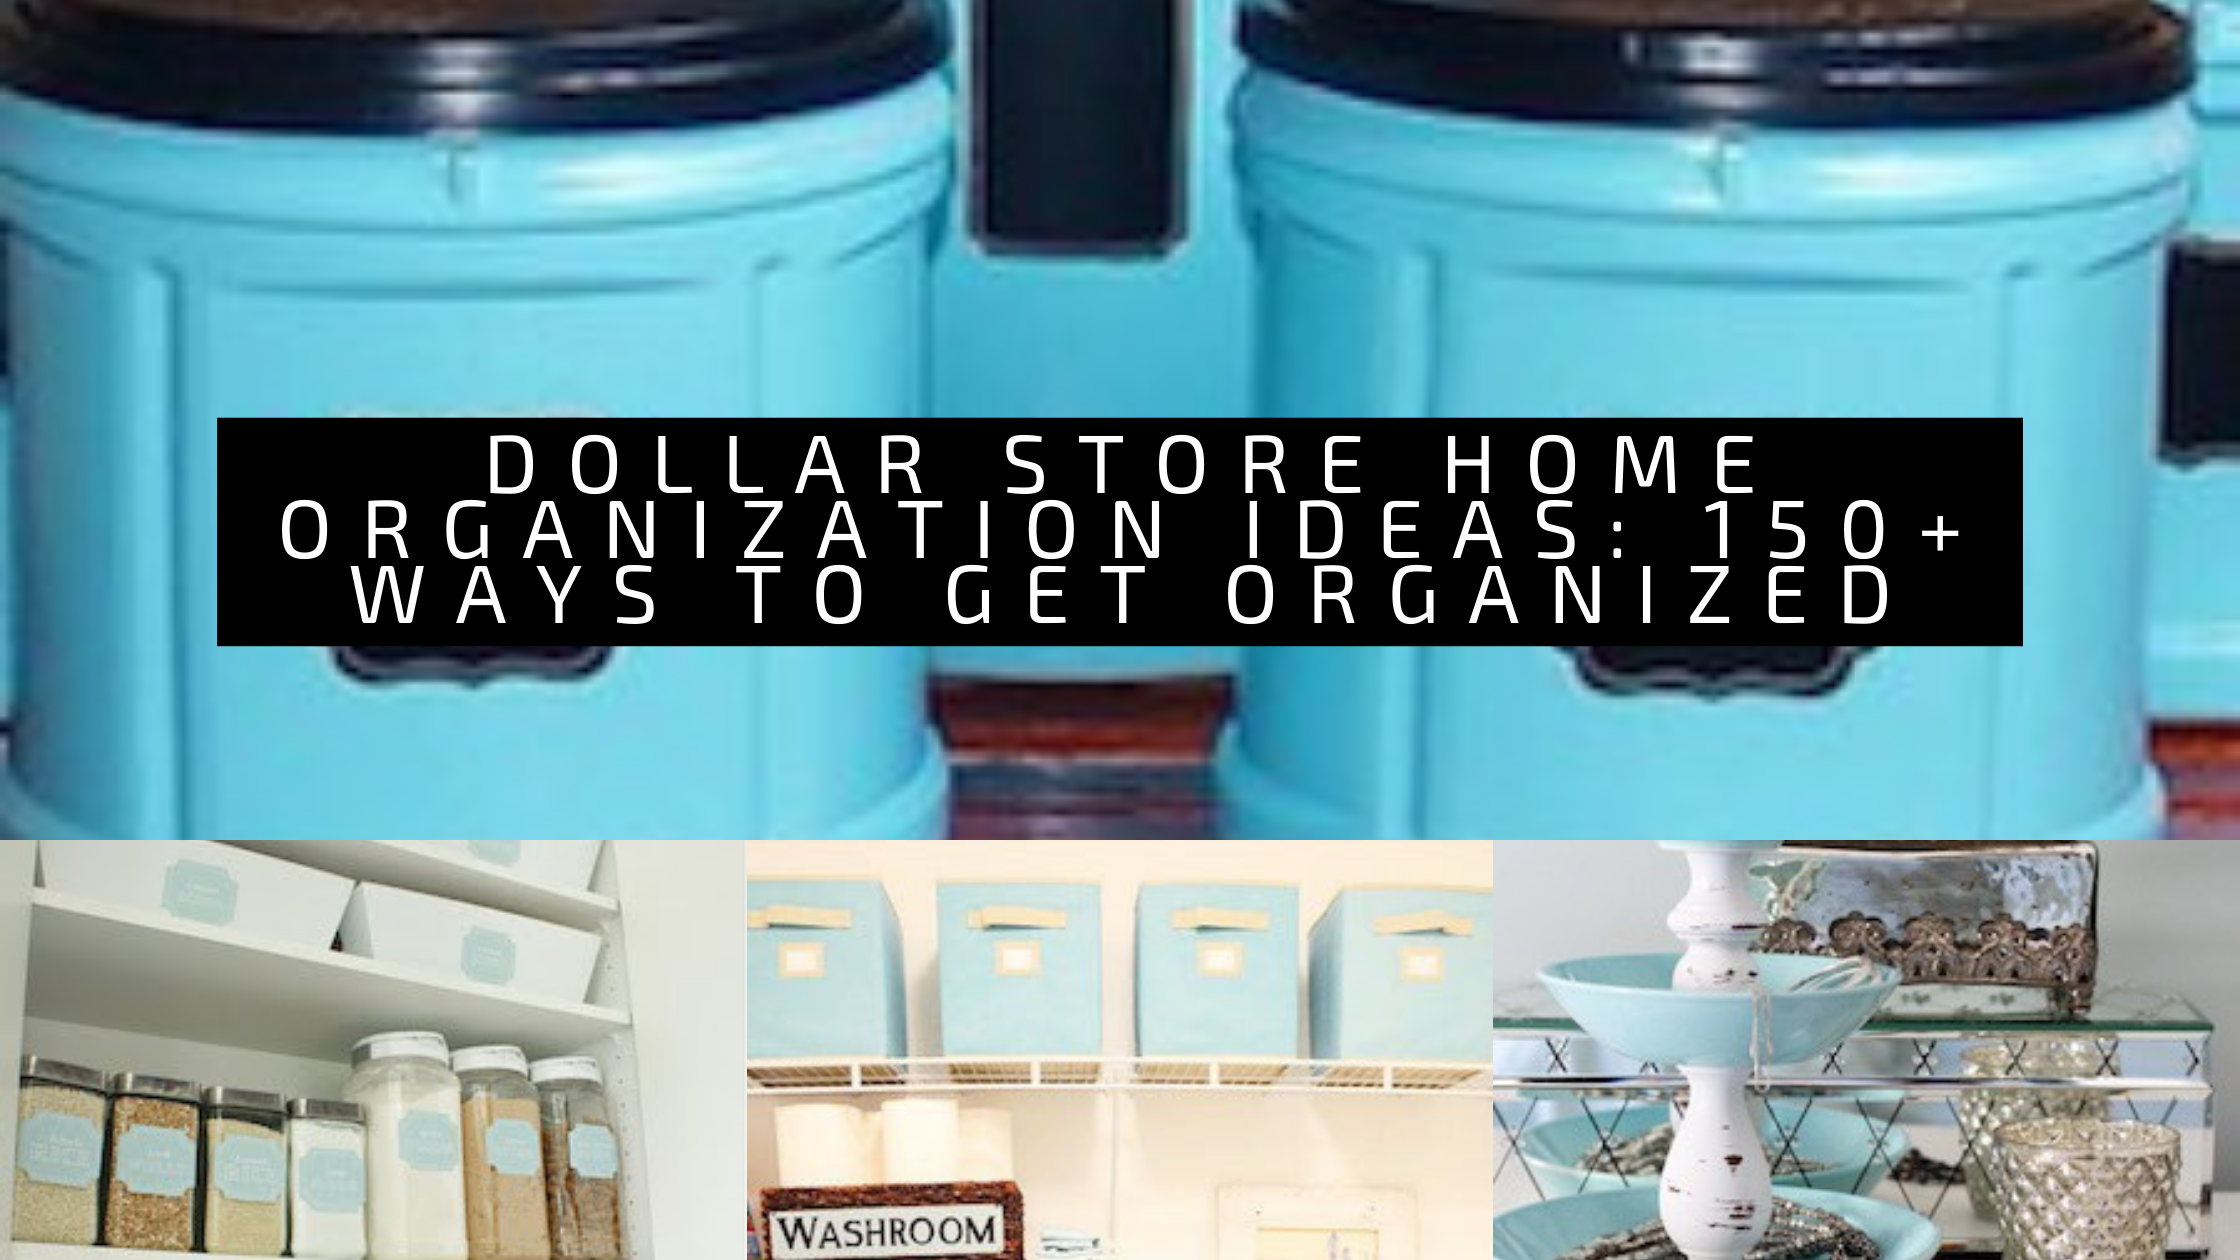 Dollar Store Home Organization Ideas: 150+ Ways to Get Organized 80